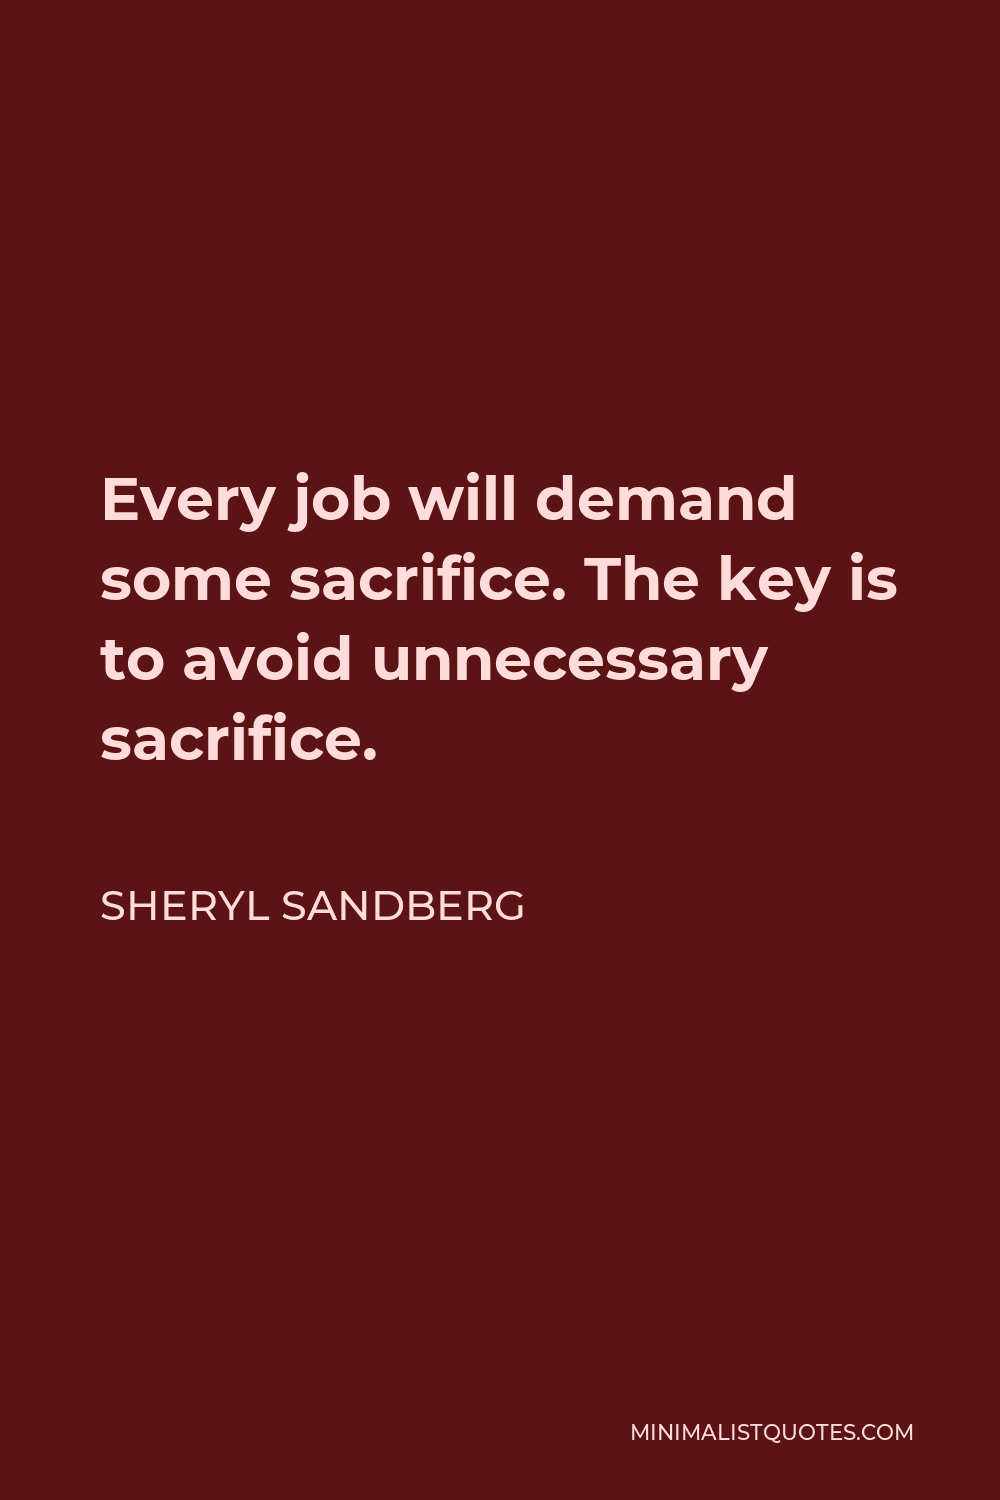 Sheryl Sandberg Quote - Every job will demand some sacrifice. The key is to avoid unnecessary sacrifice.